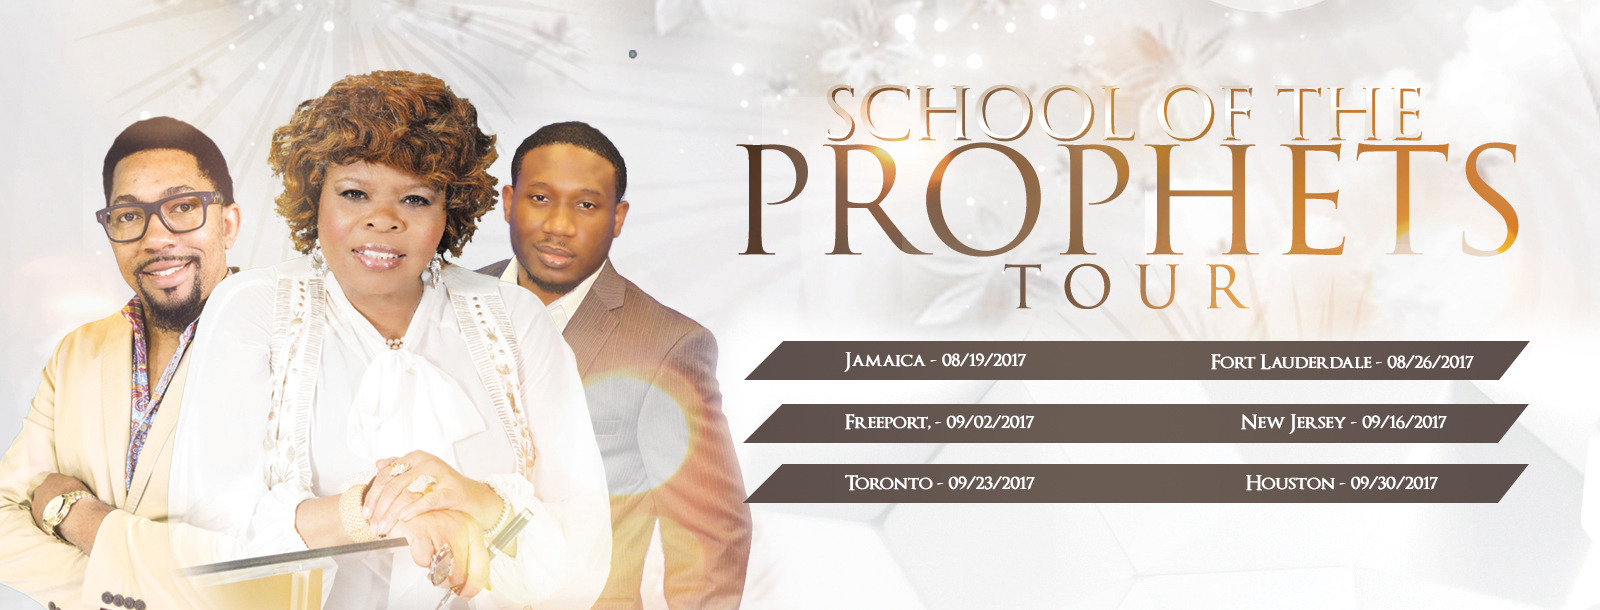 school of the prophets pdf